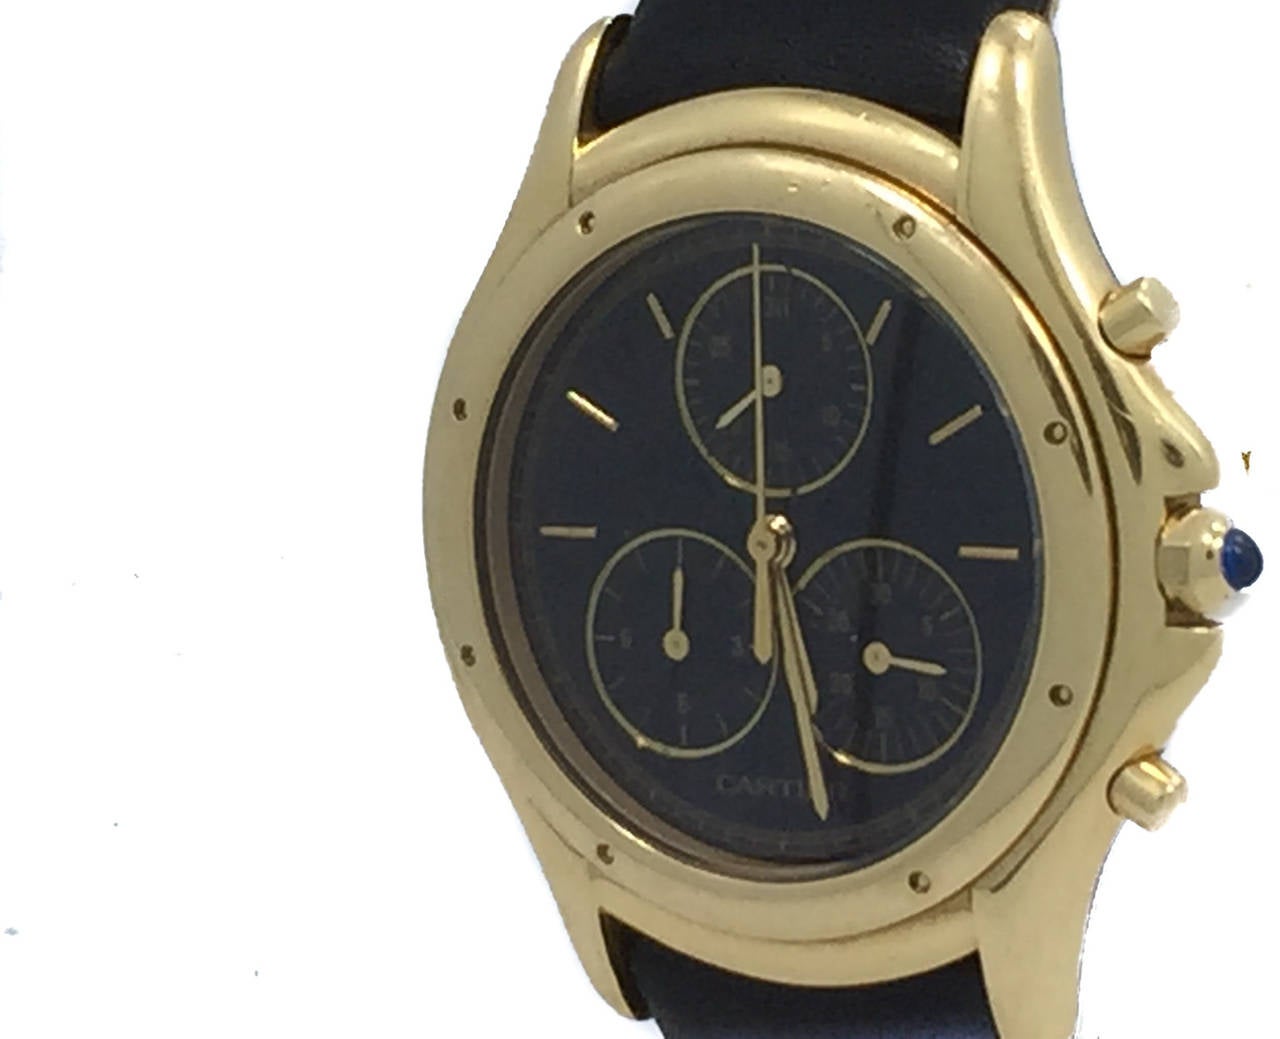 Cartier Yellow Gold Cougar Chronograph Wristwatch 1